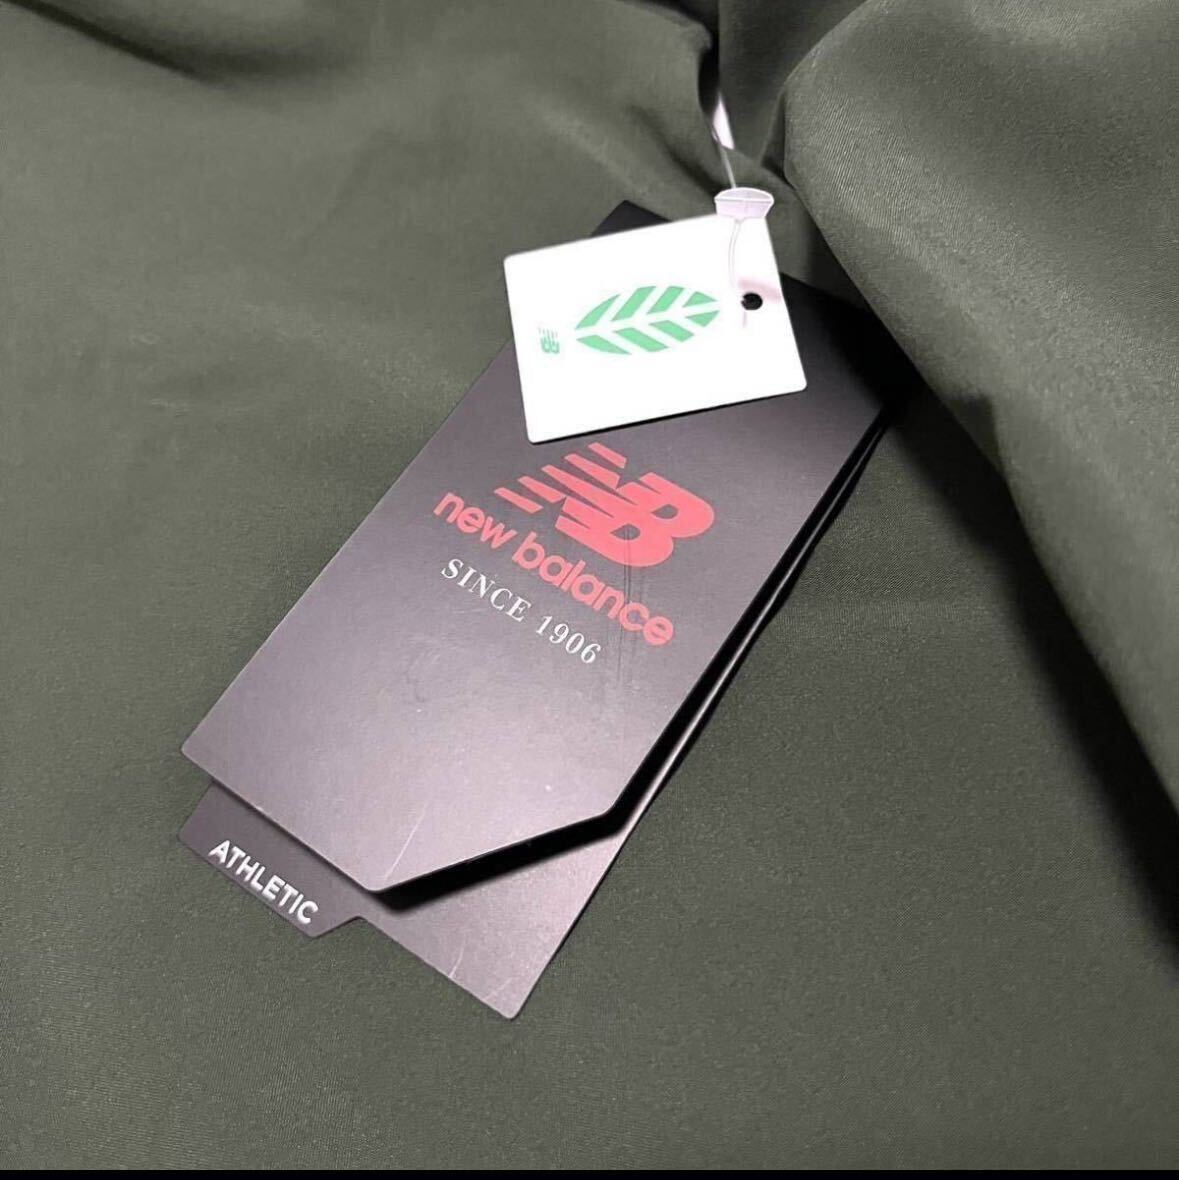 *H589 new goods [ Japan L size ] green khaki spring summer New balance Golf optimum jacket all season New Balance GOLF Bomber jacket 